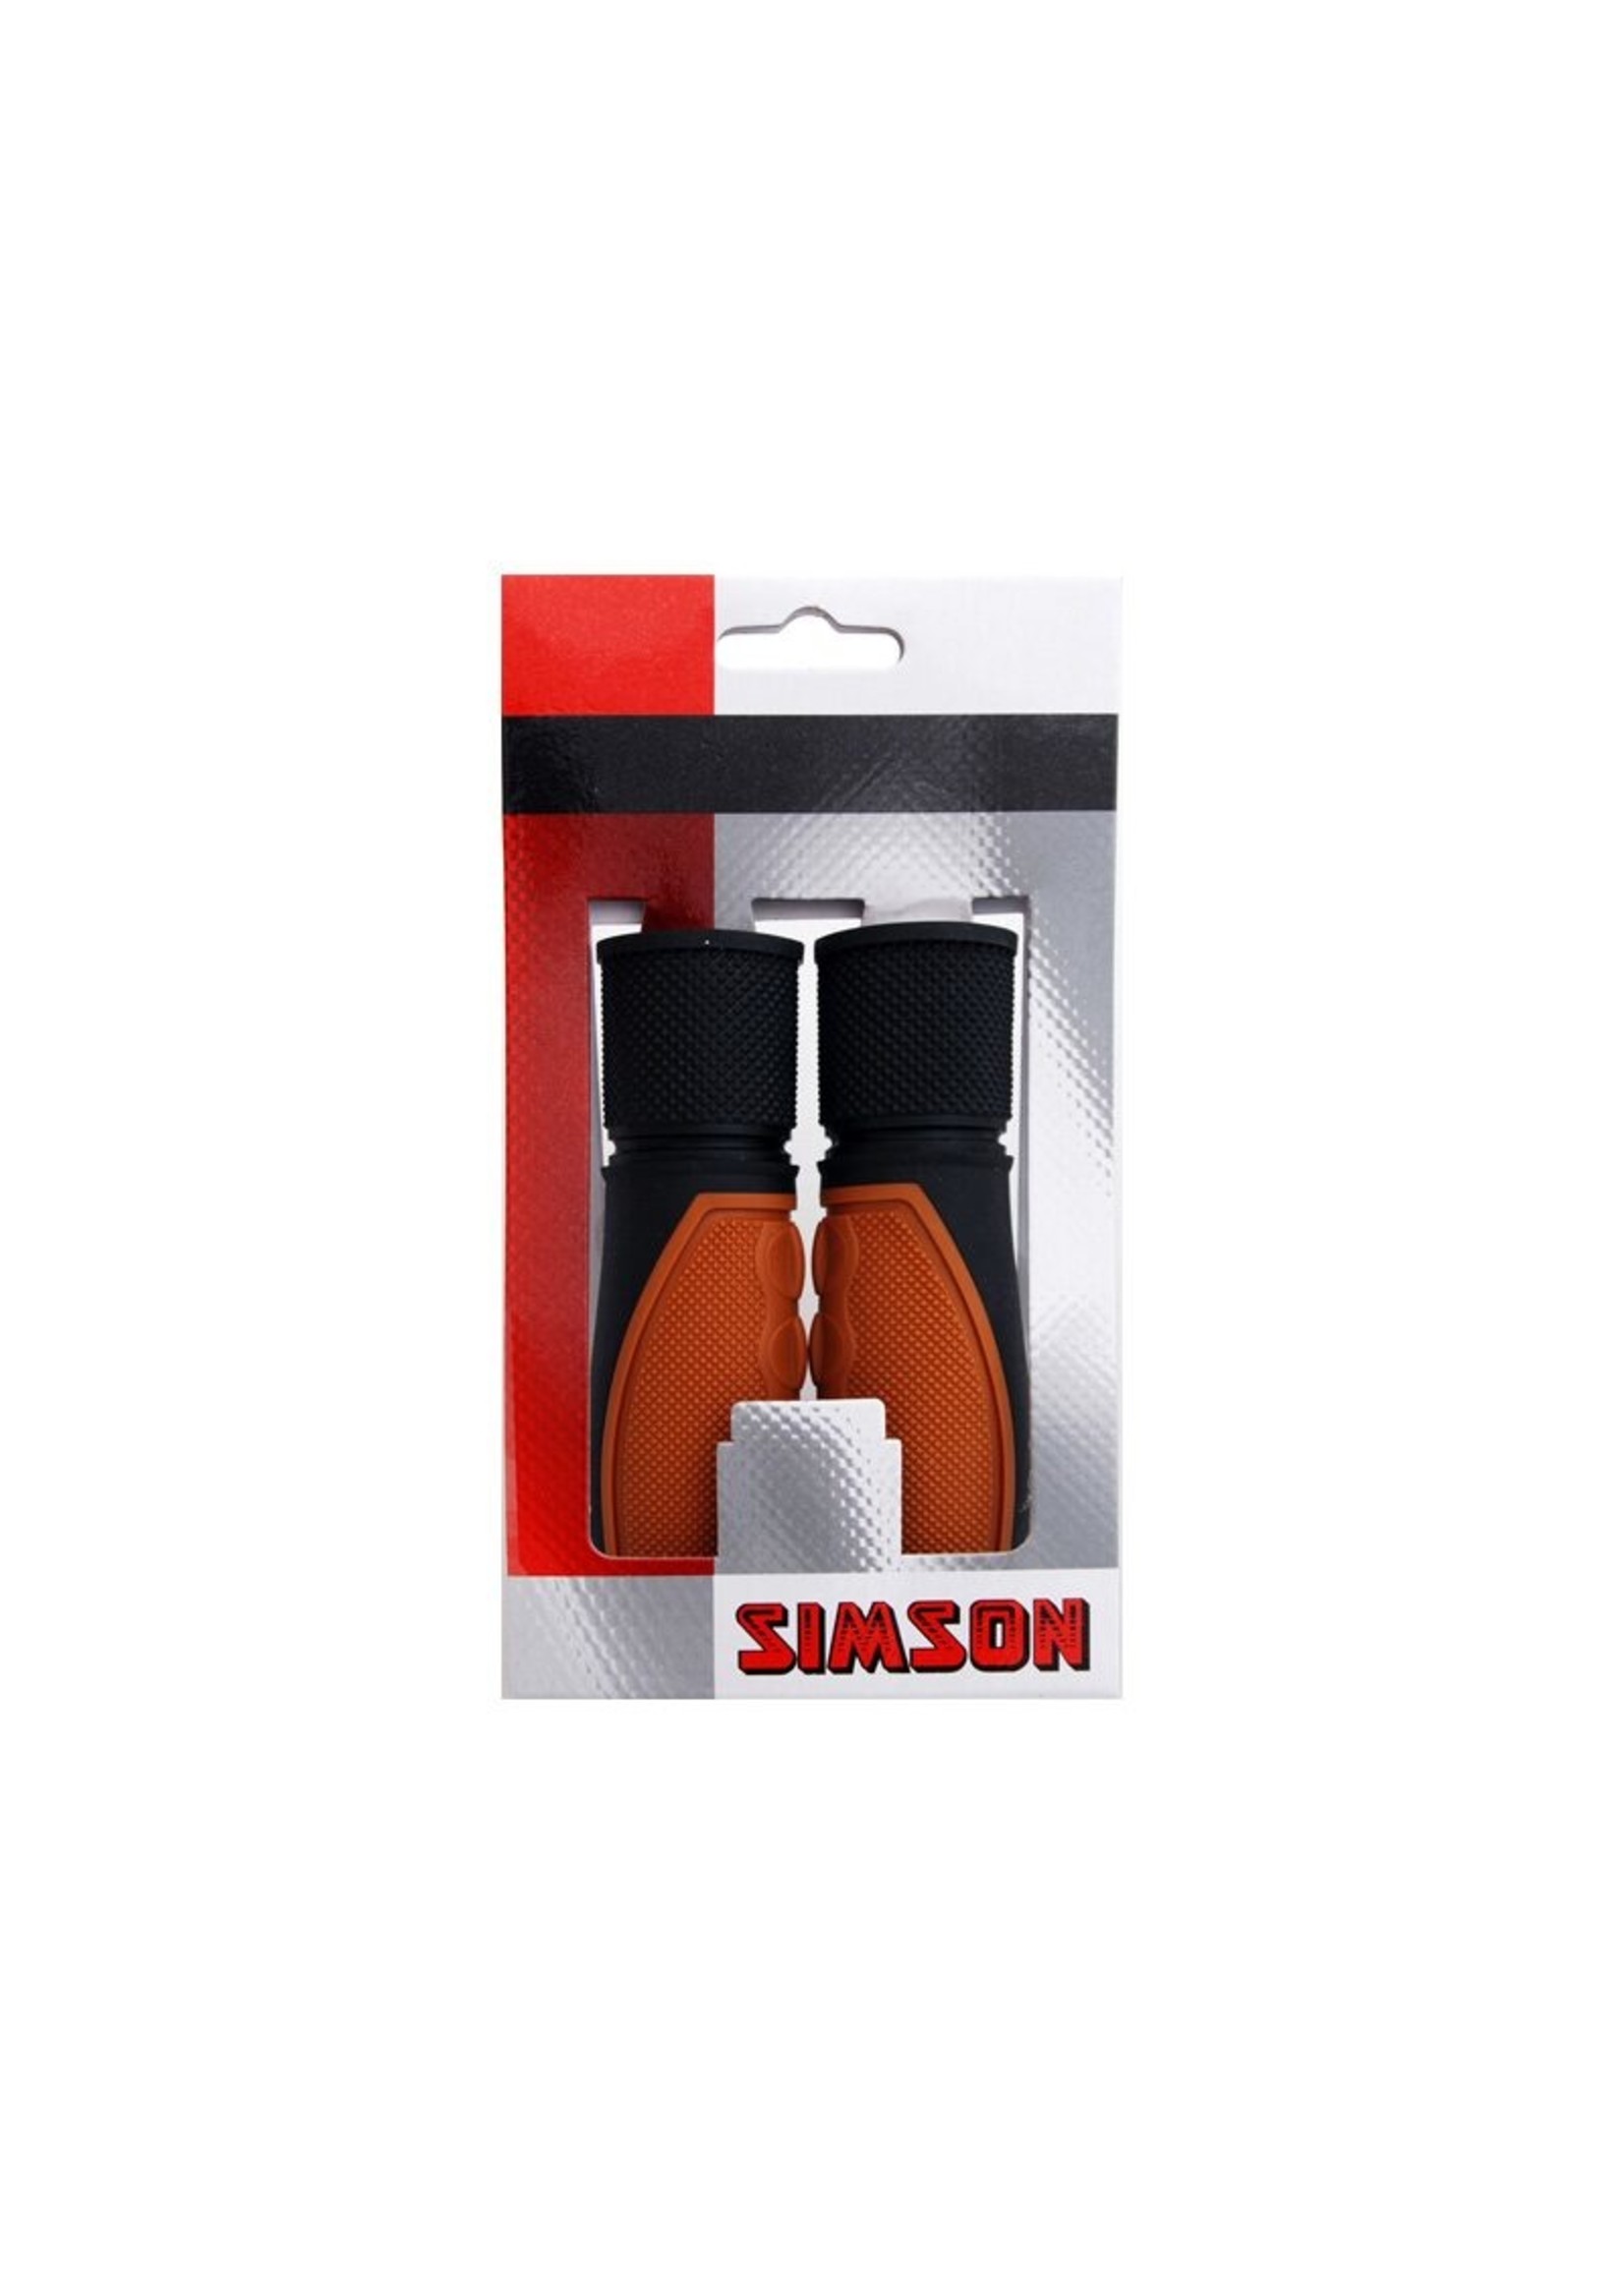 Simson - Grips Lifestyle light brown-black